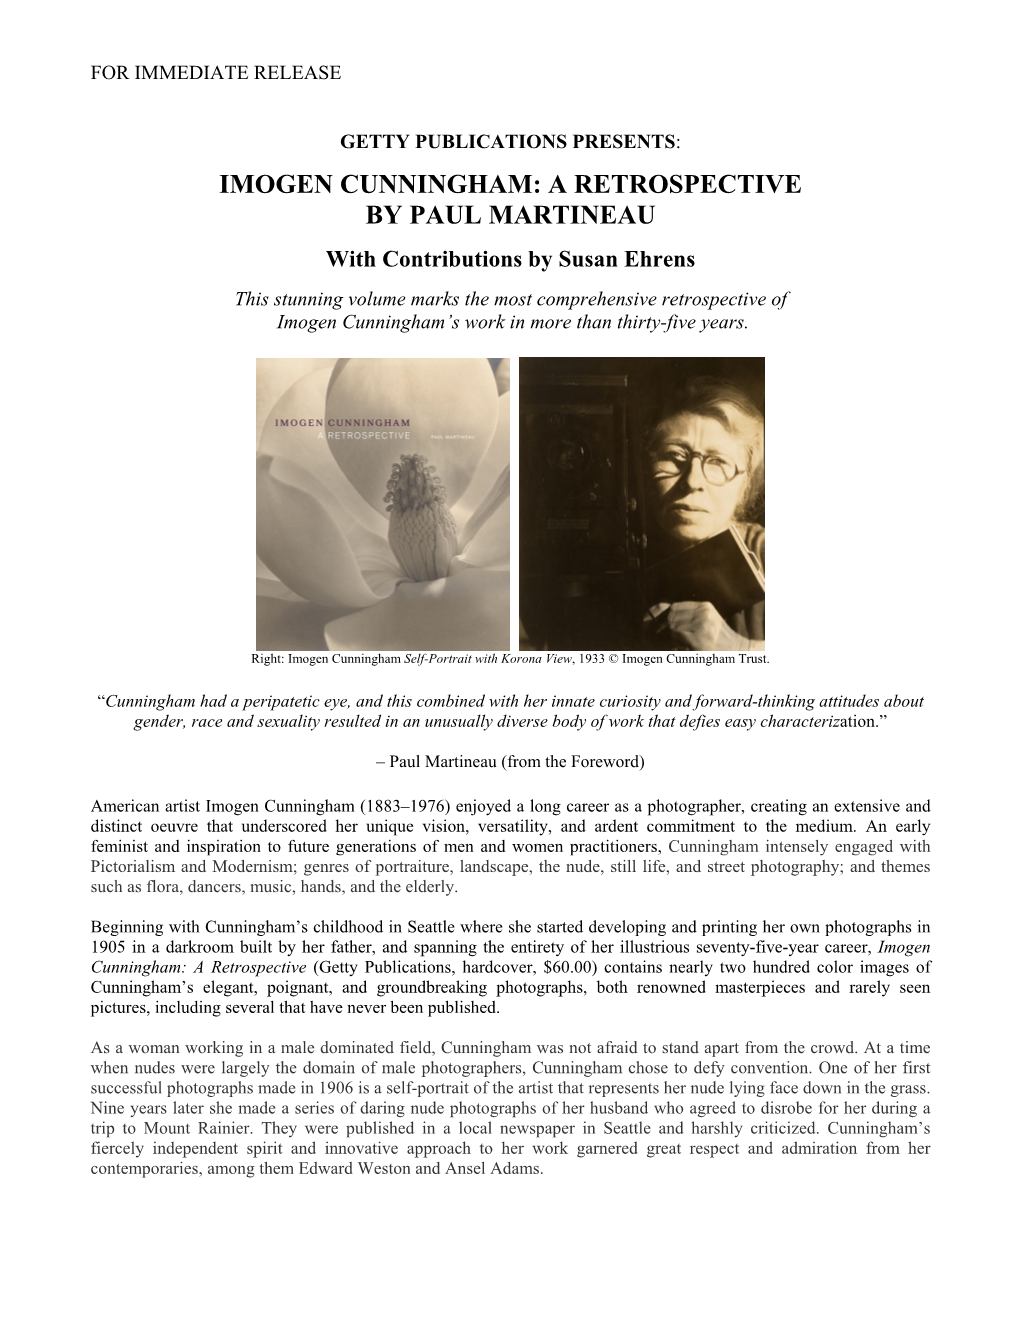 Imogen Cunningham: a Retrospective by Paul Martineau